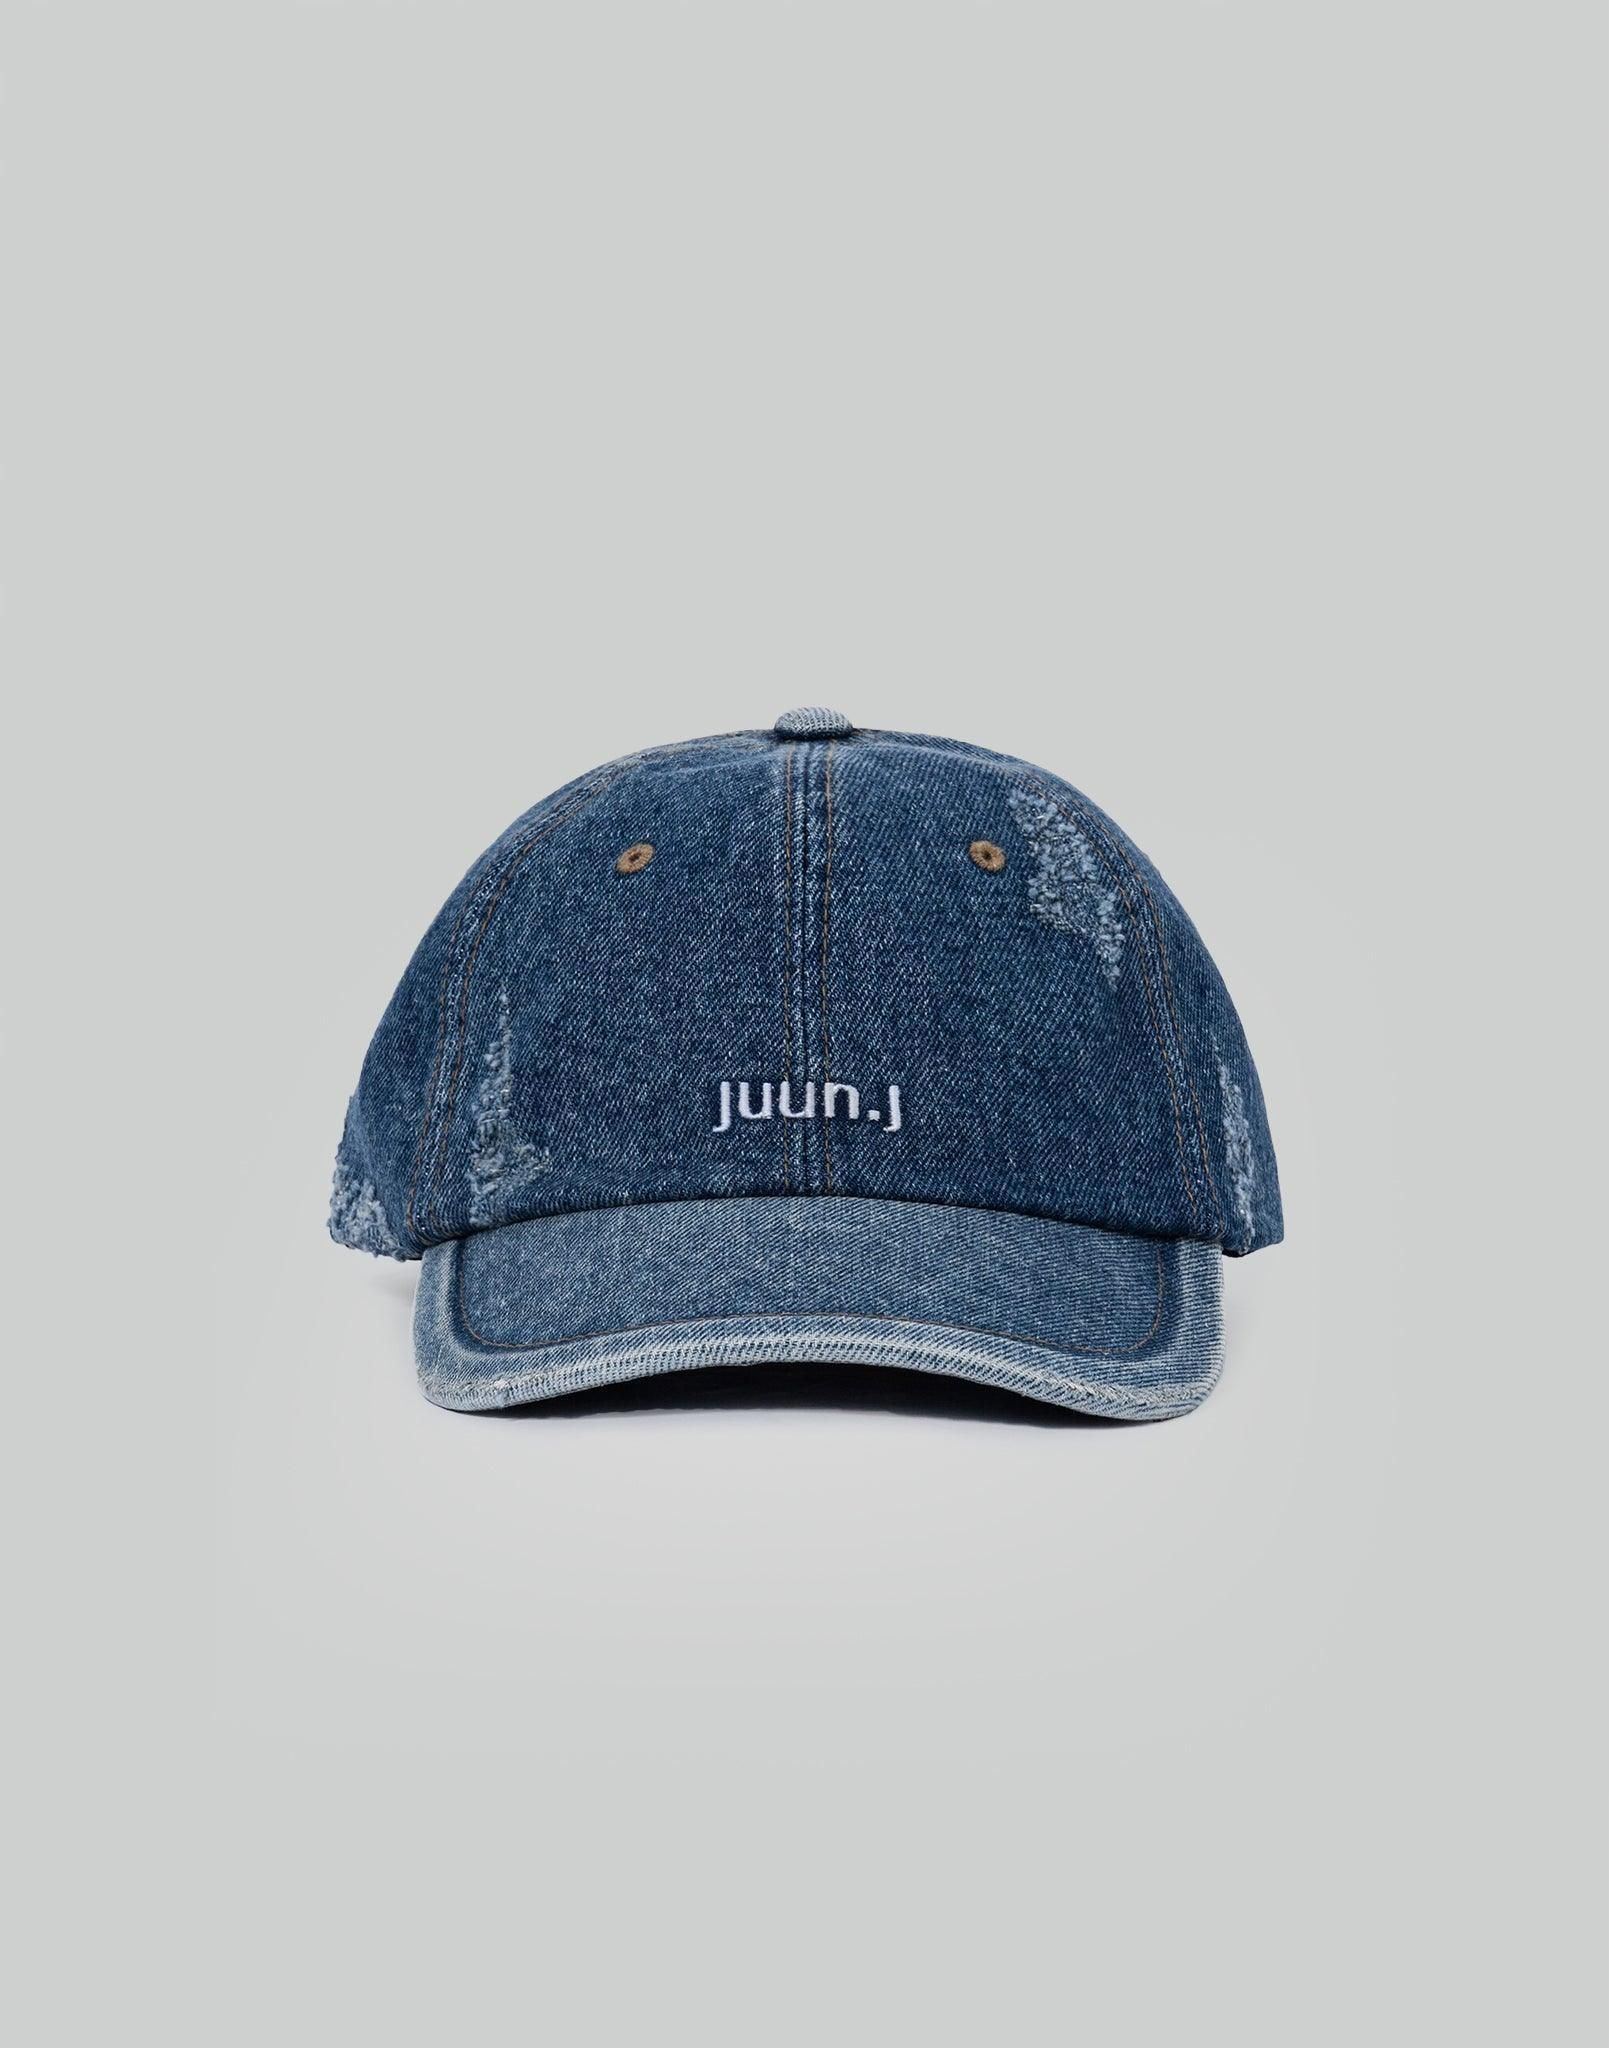 Juun.J Juun.Jeans Embroidered Ball Cap - 082plus